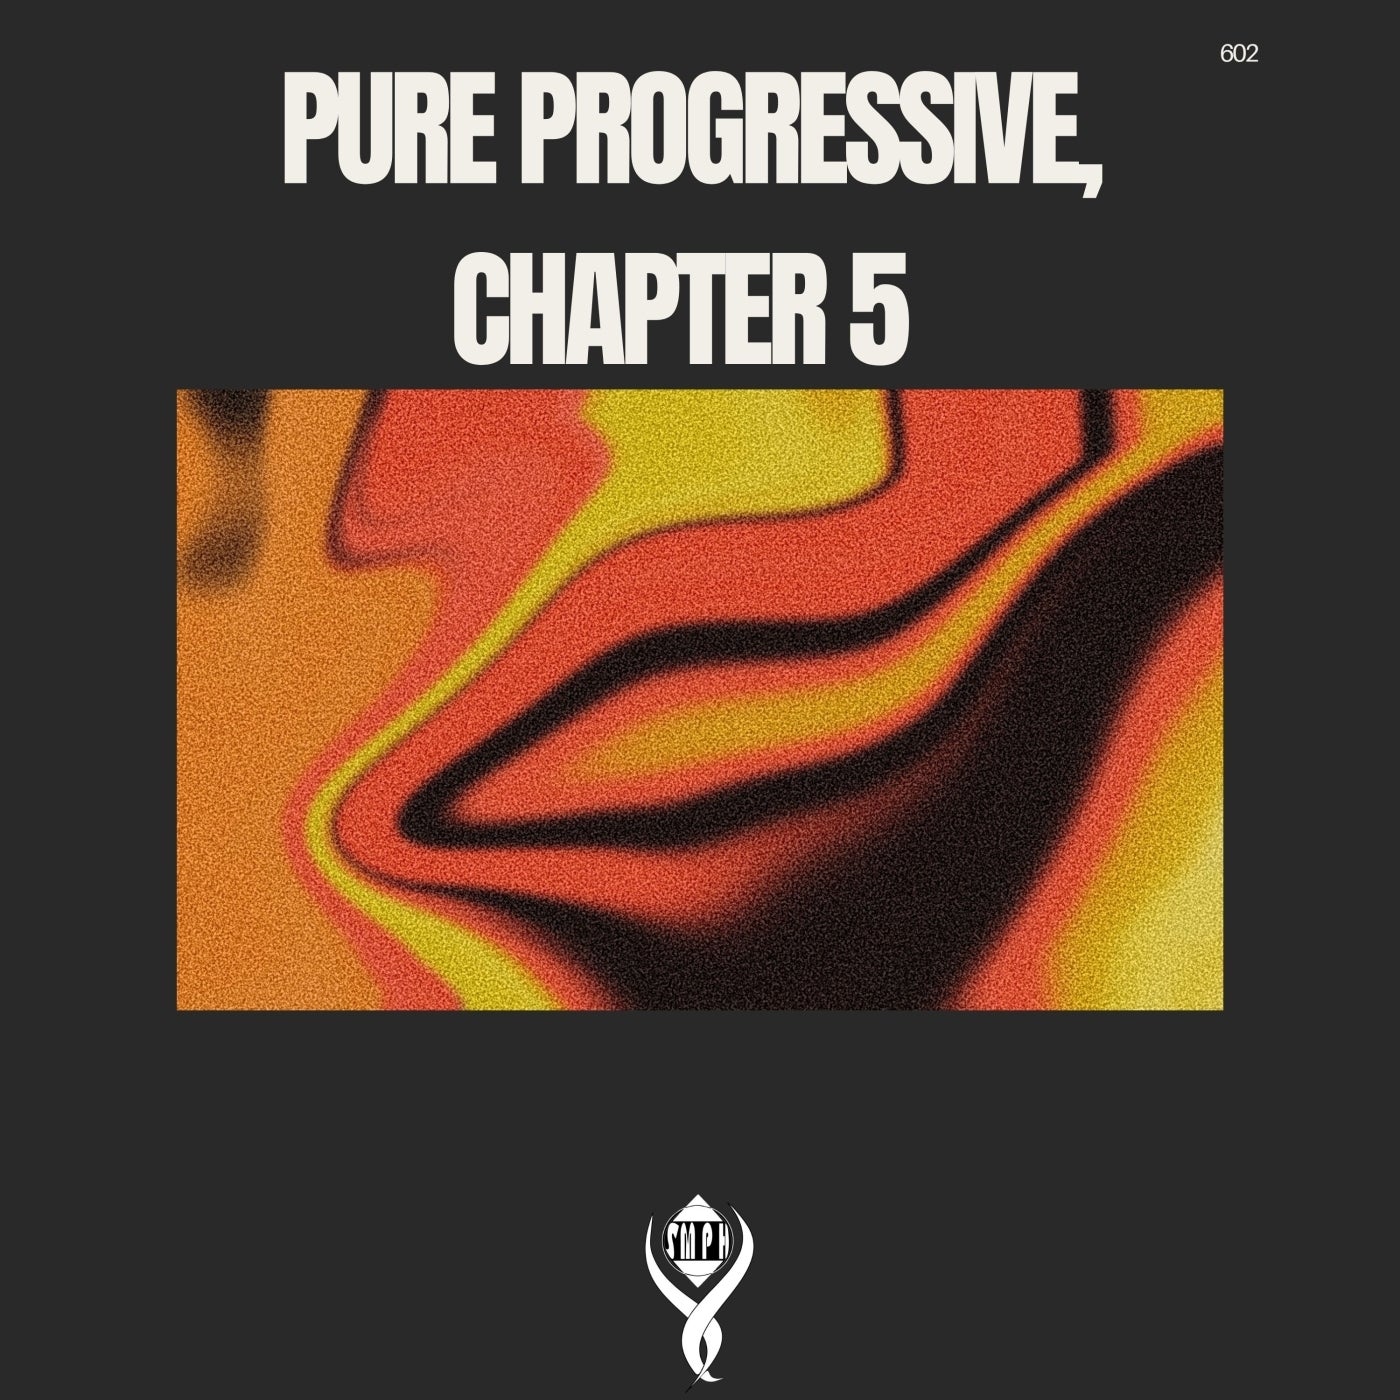 Pure Progressive, Chapter 5